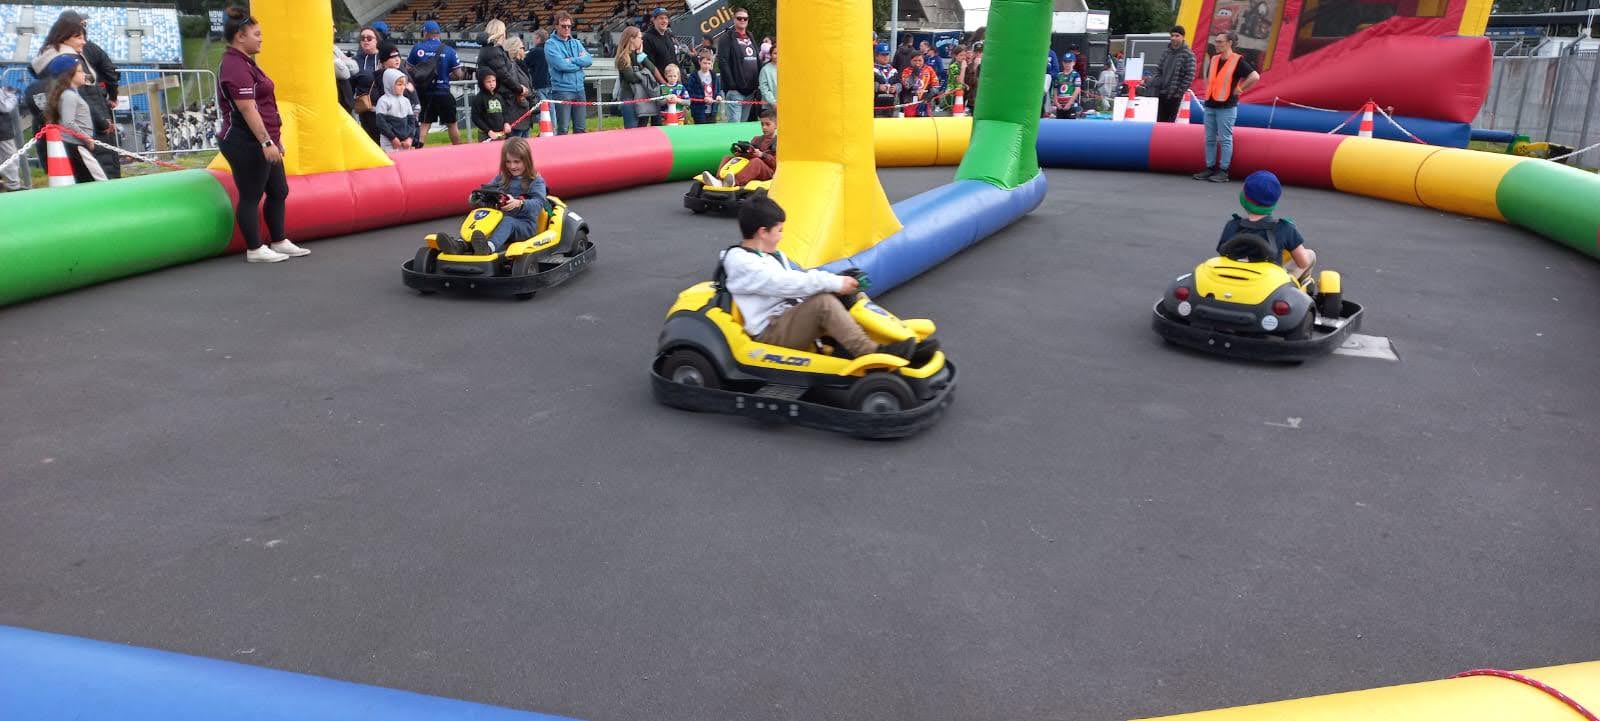 Electric go karts ride at mount smart stadium